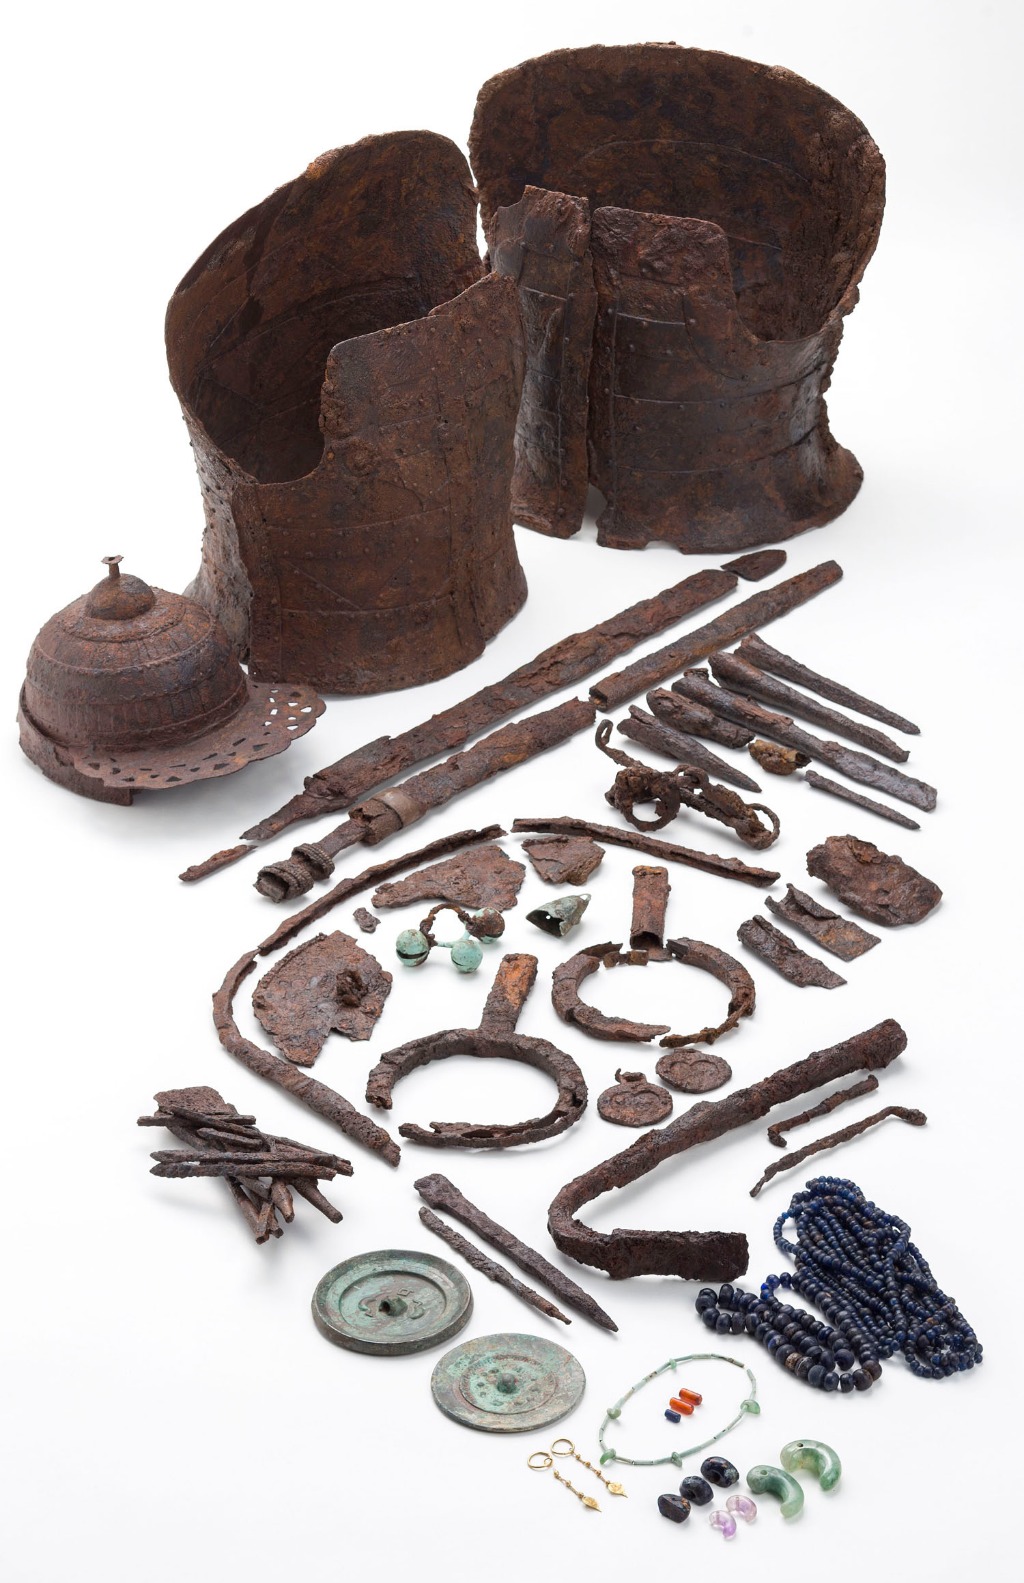 Superb grave items that are representative of life in the Kofun period